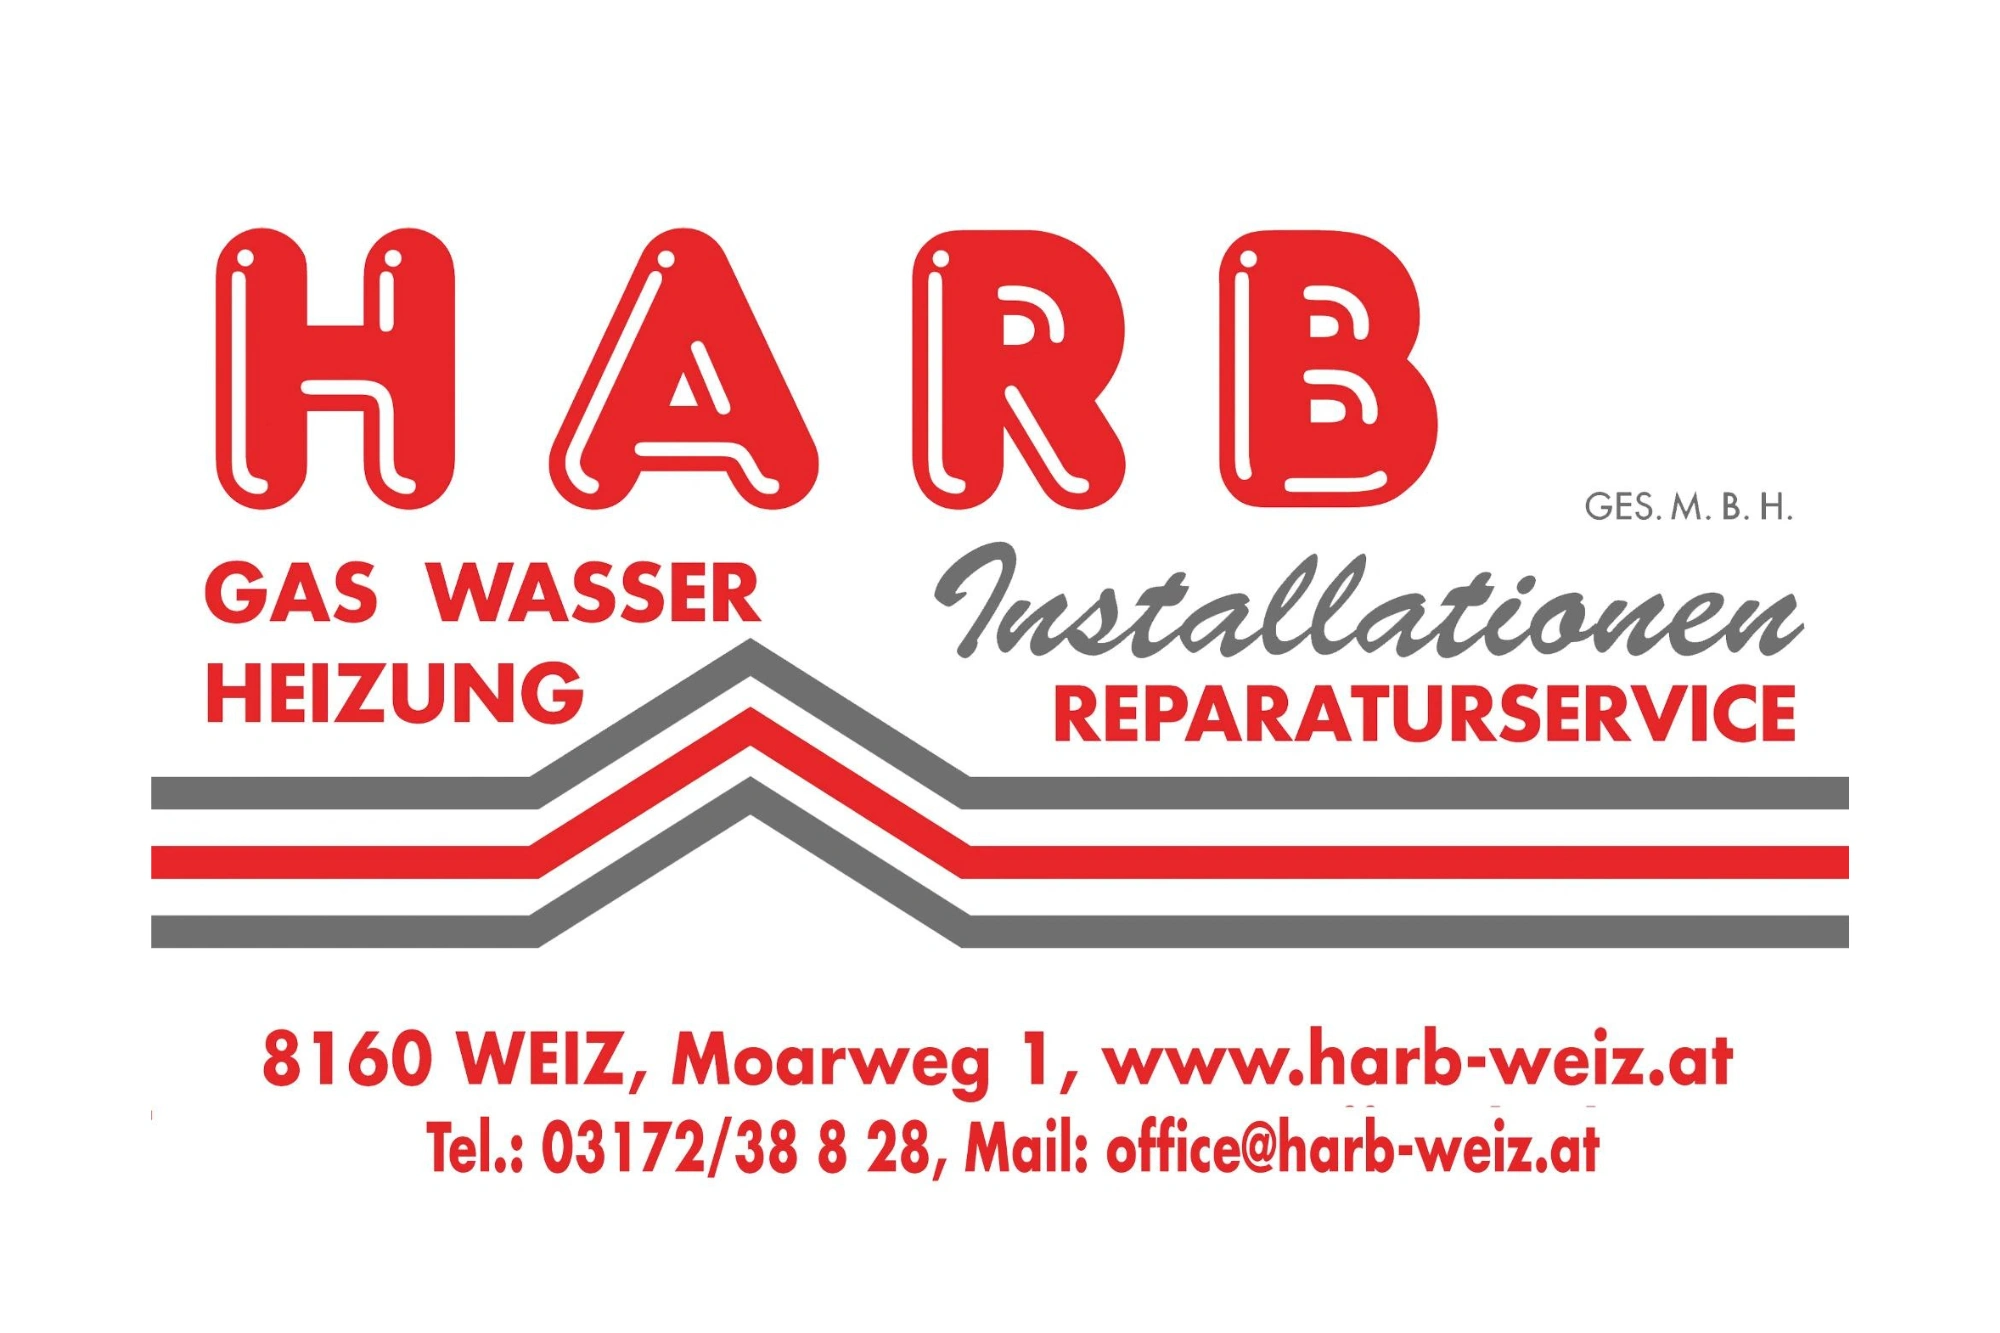 harb_installationen